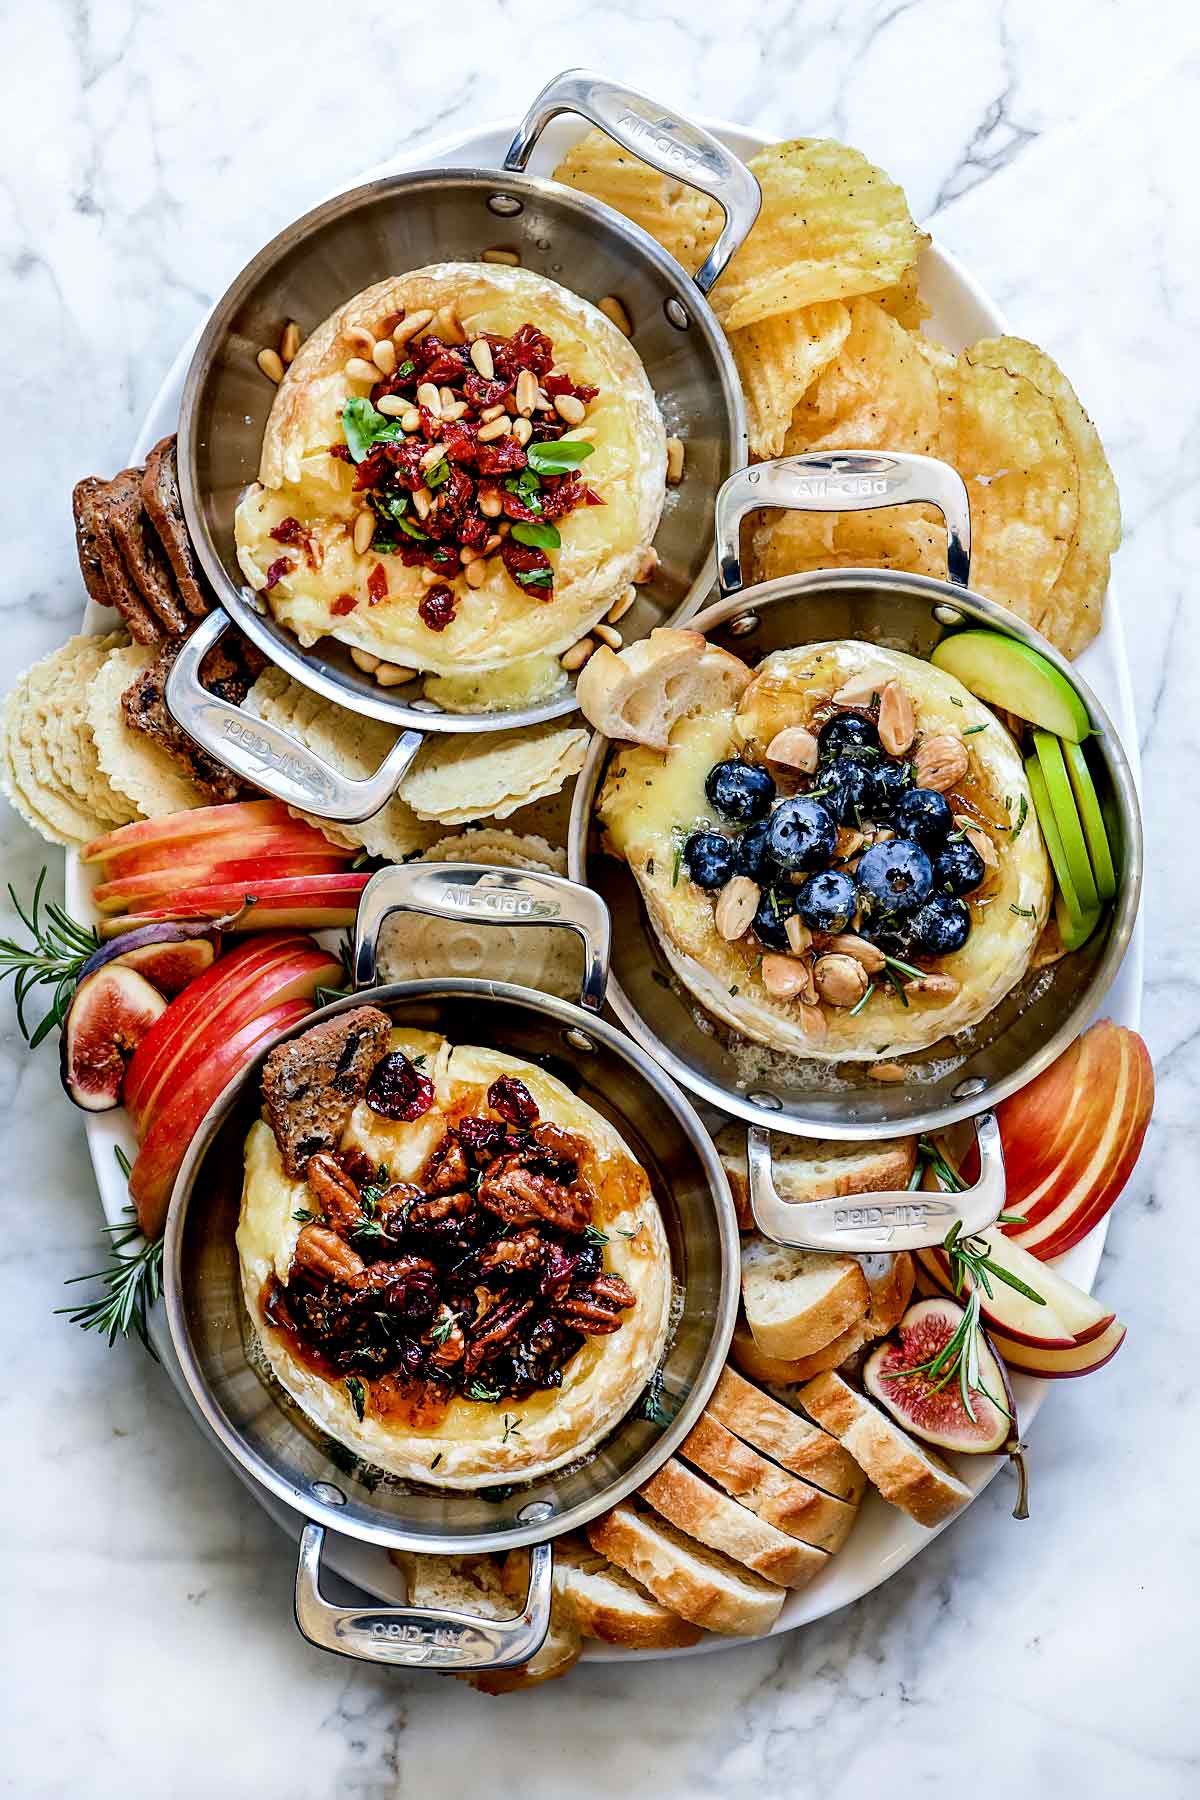 https://www.foodiecrush.com/wp-content/uploads/2019/11/Baked-Brie-foodiecrush.com-030.jpg